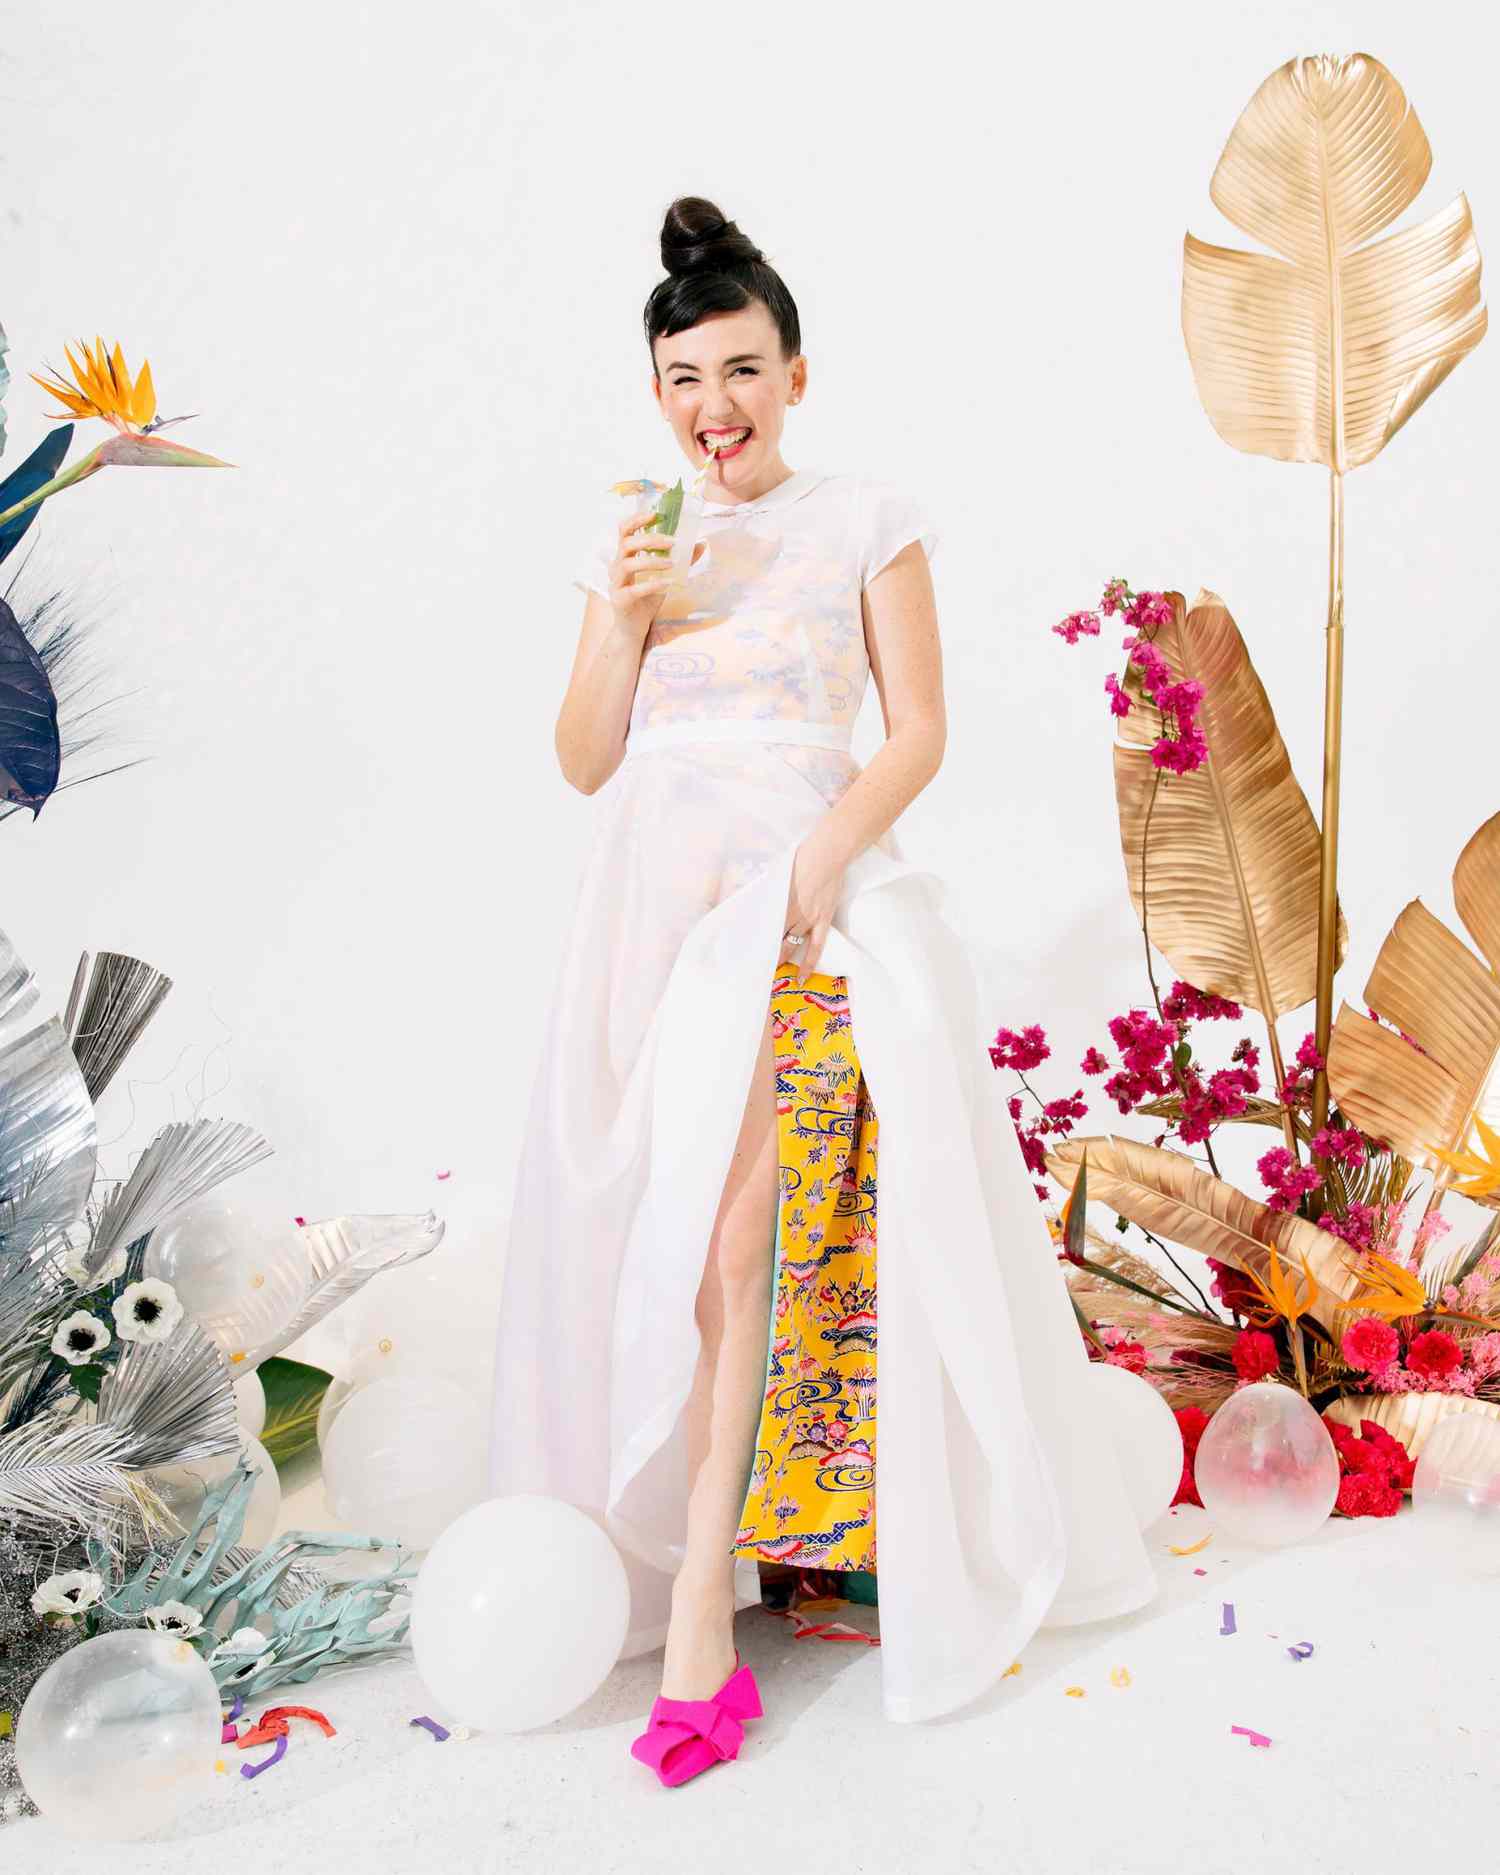 tashina huy colorful wedding bride dress transform